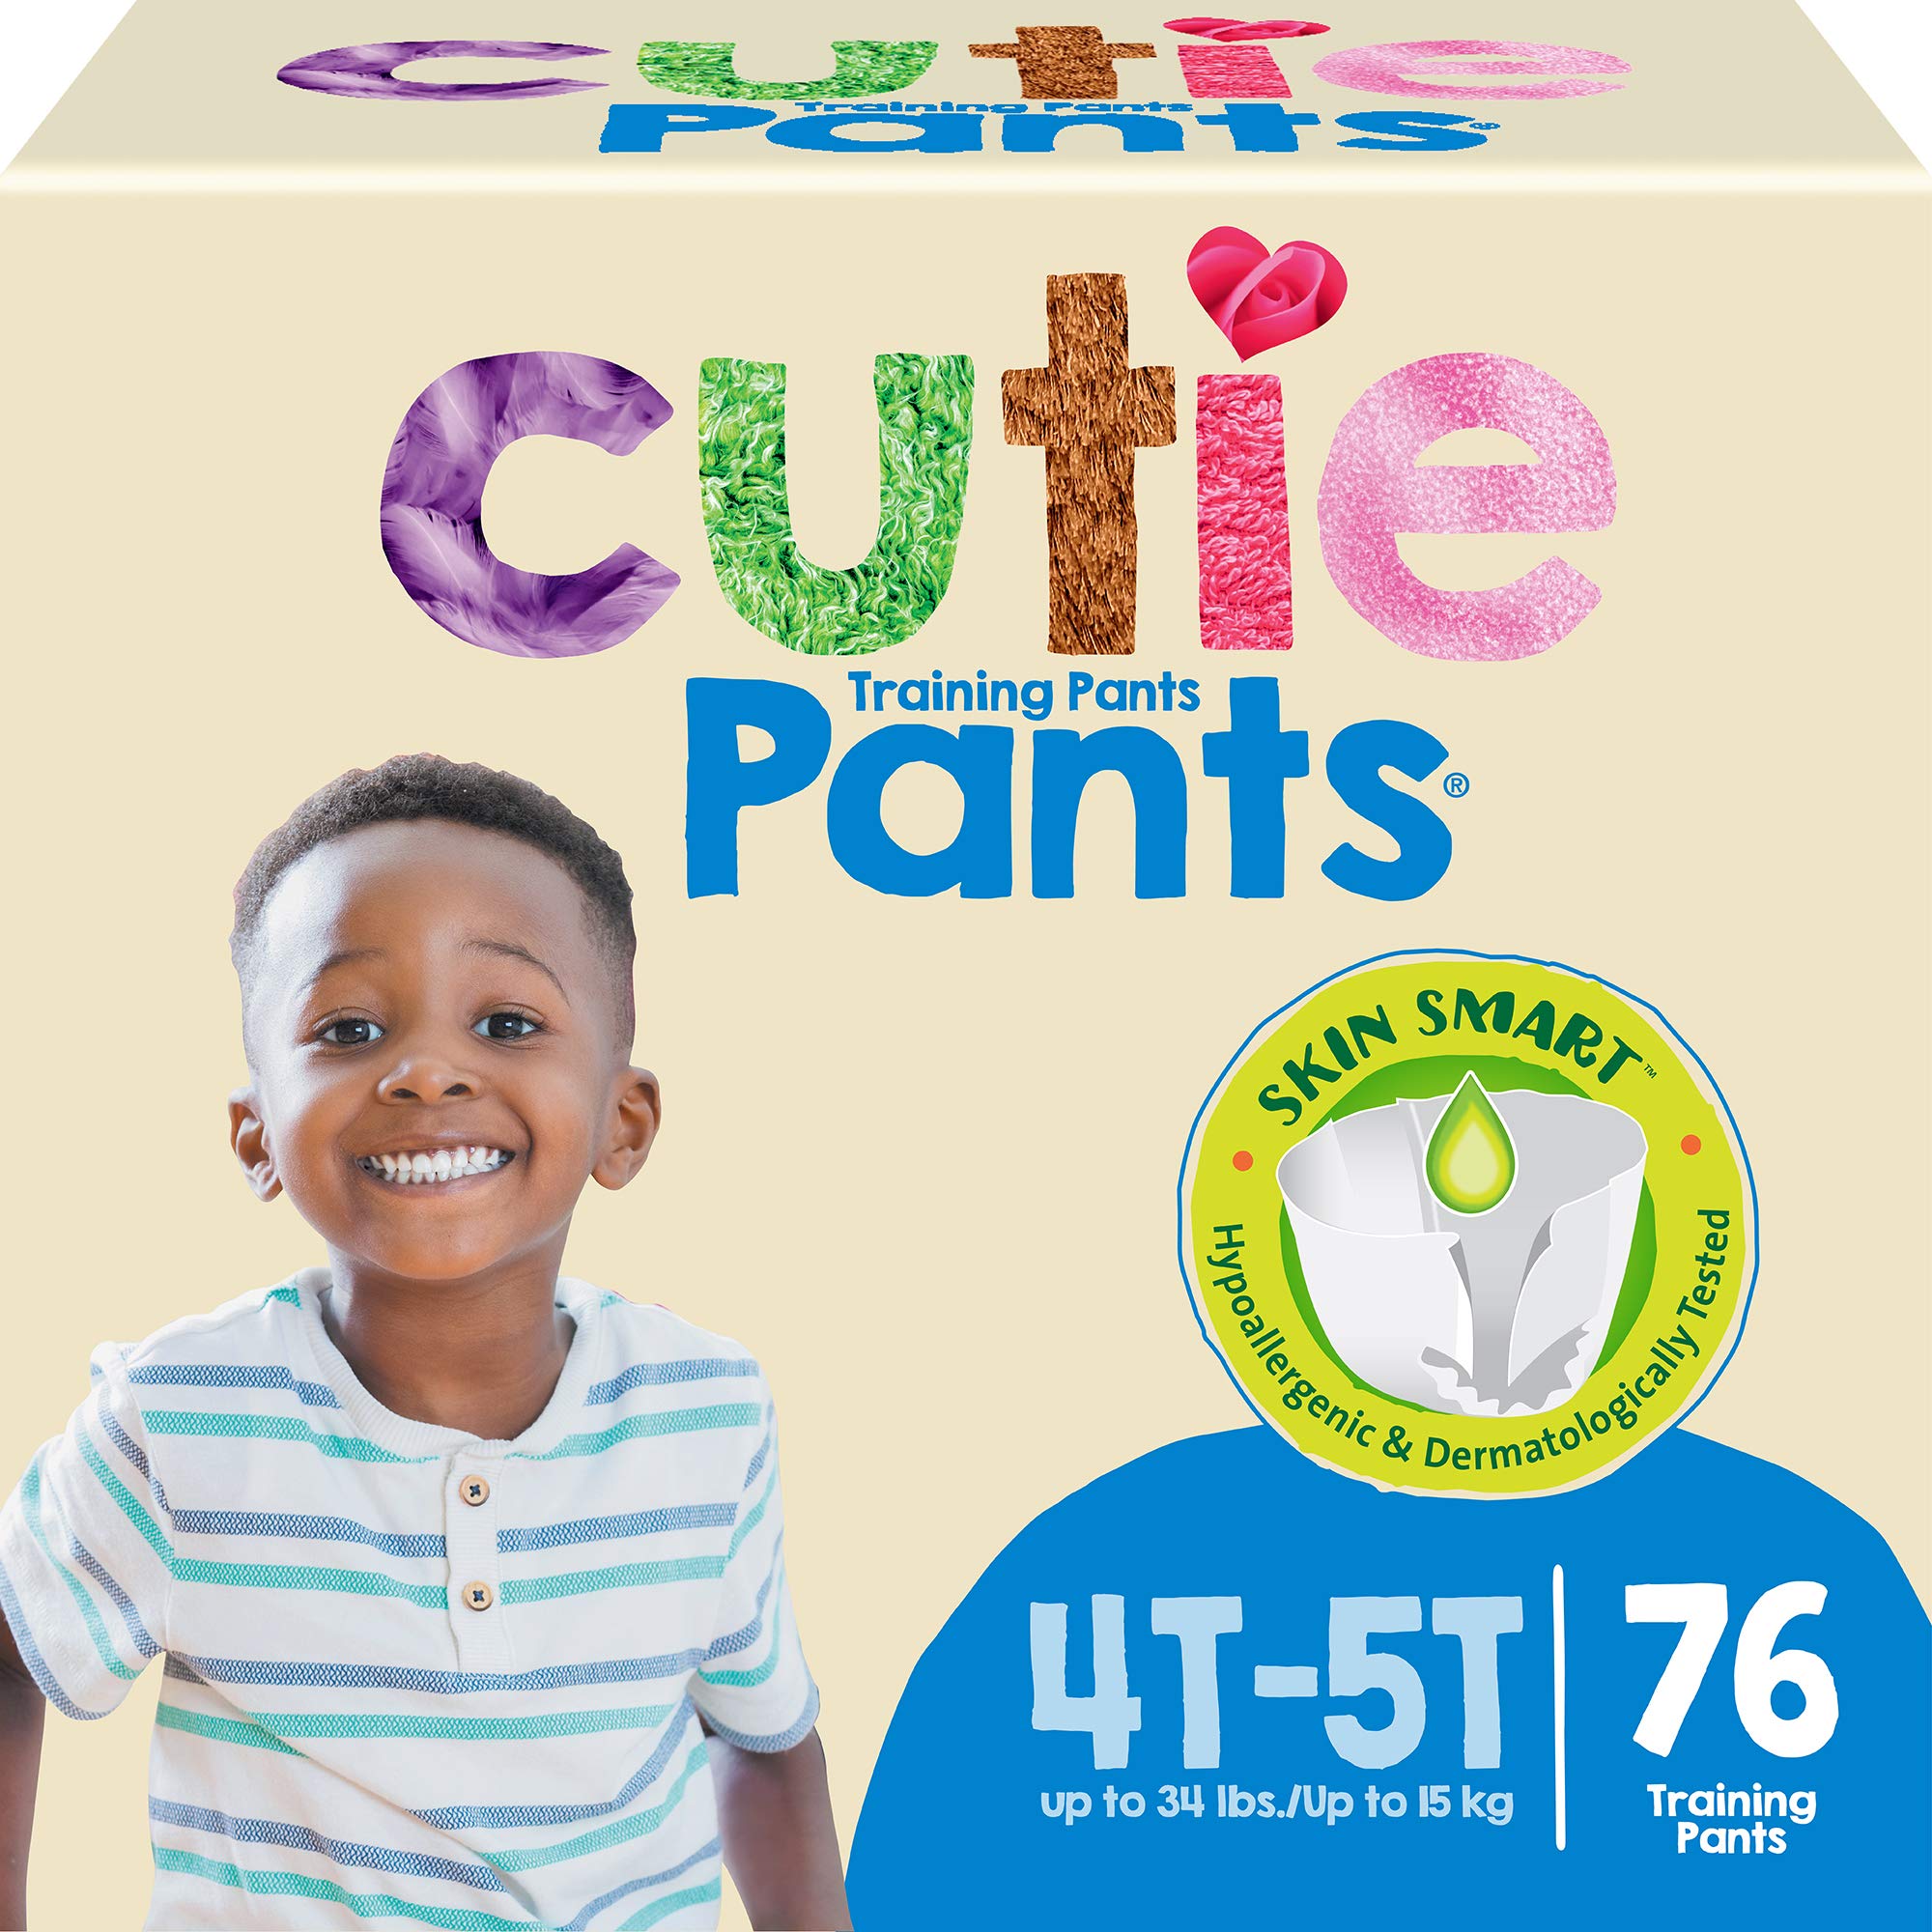 Boys Training Pants 4T-5T Over 38 lbs. | Cuties